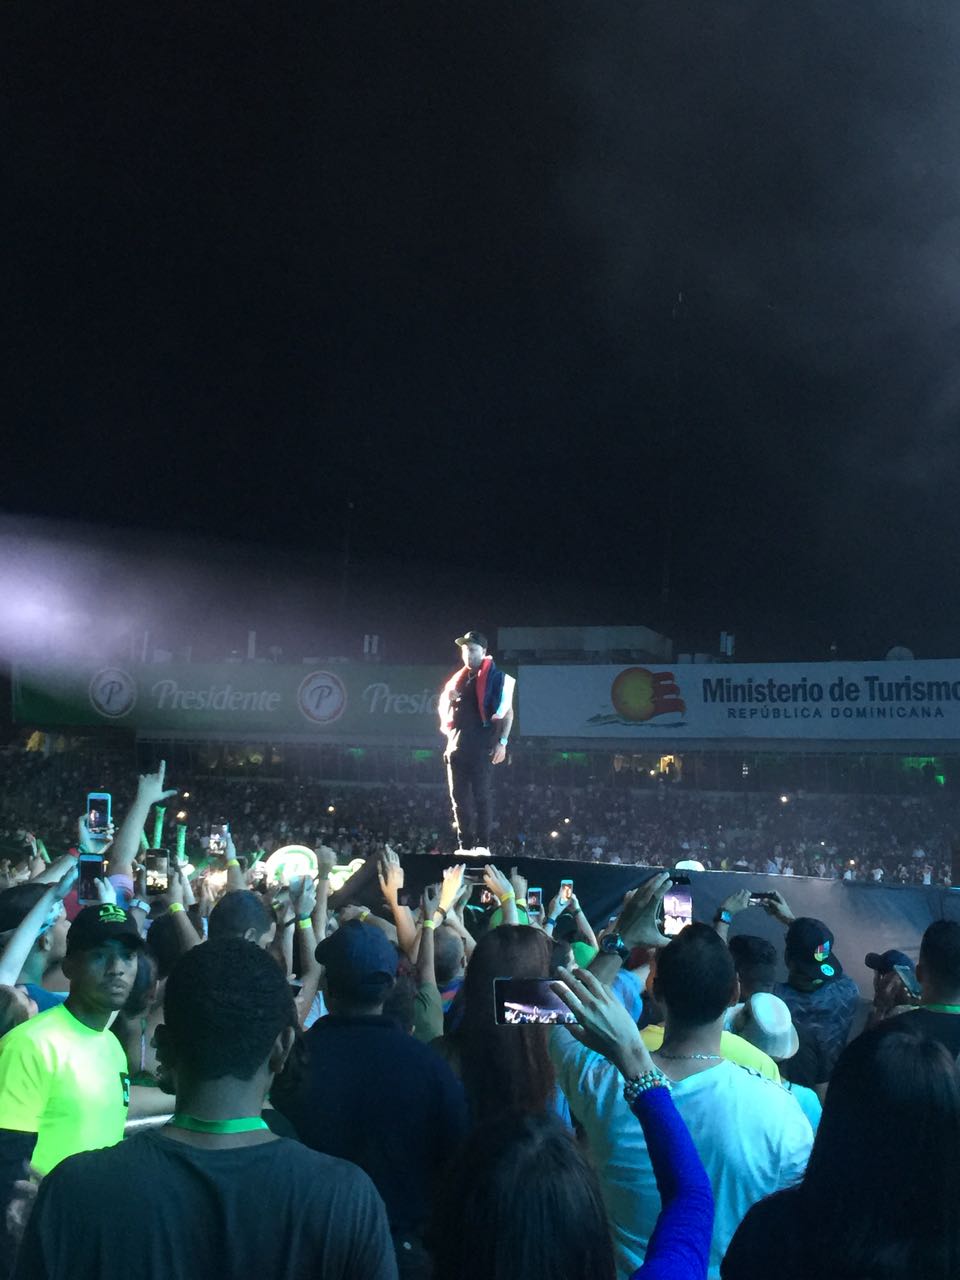 Nicky Jam mantuvo activo al público del Festival Presidente